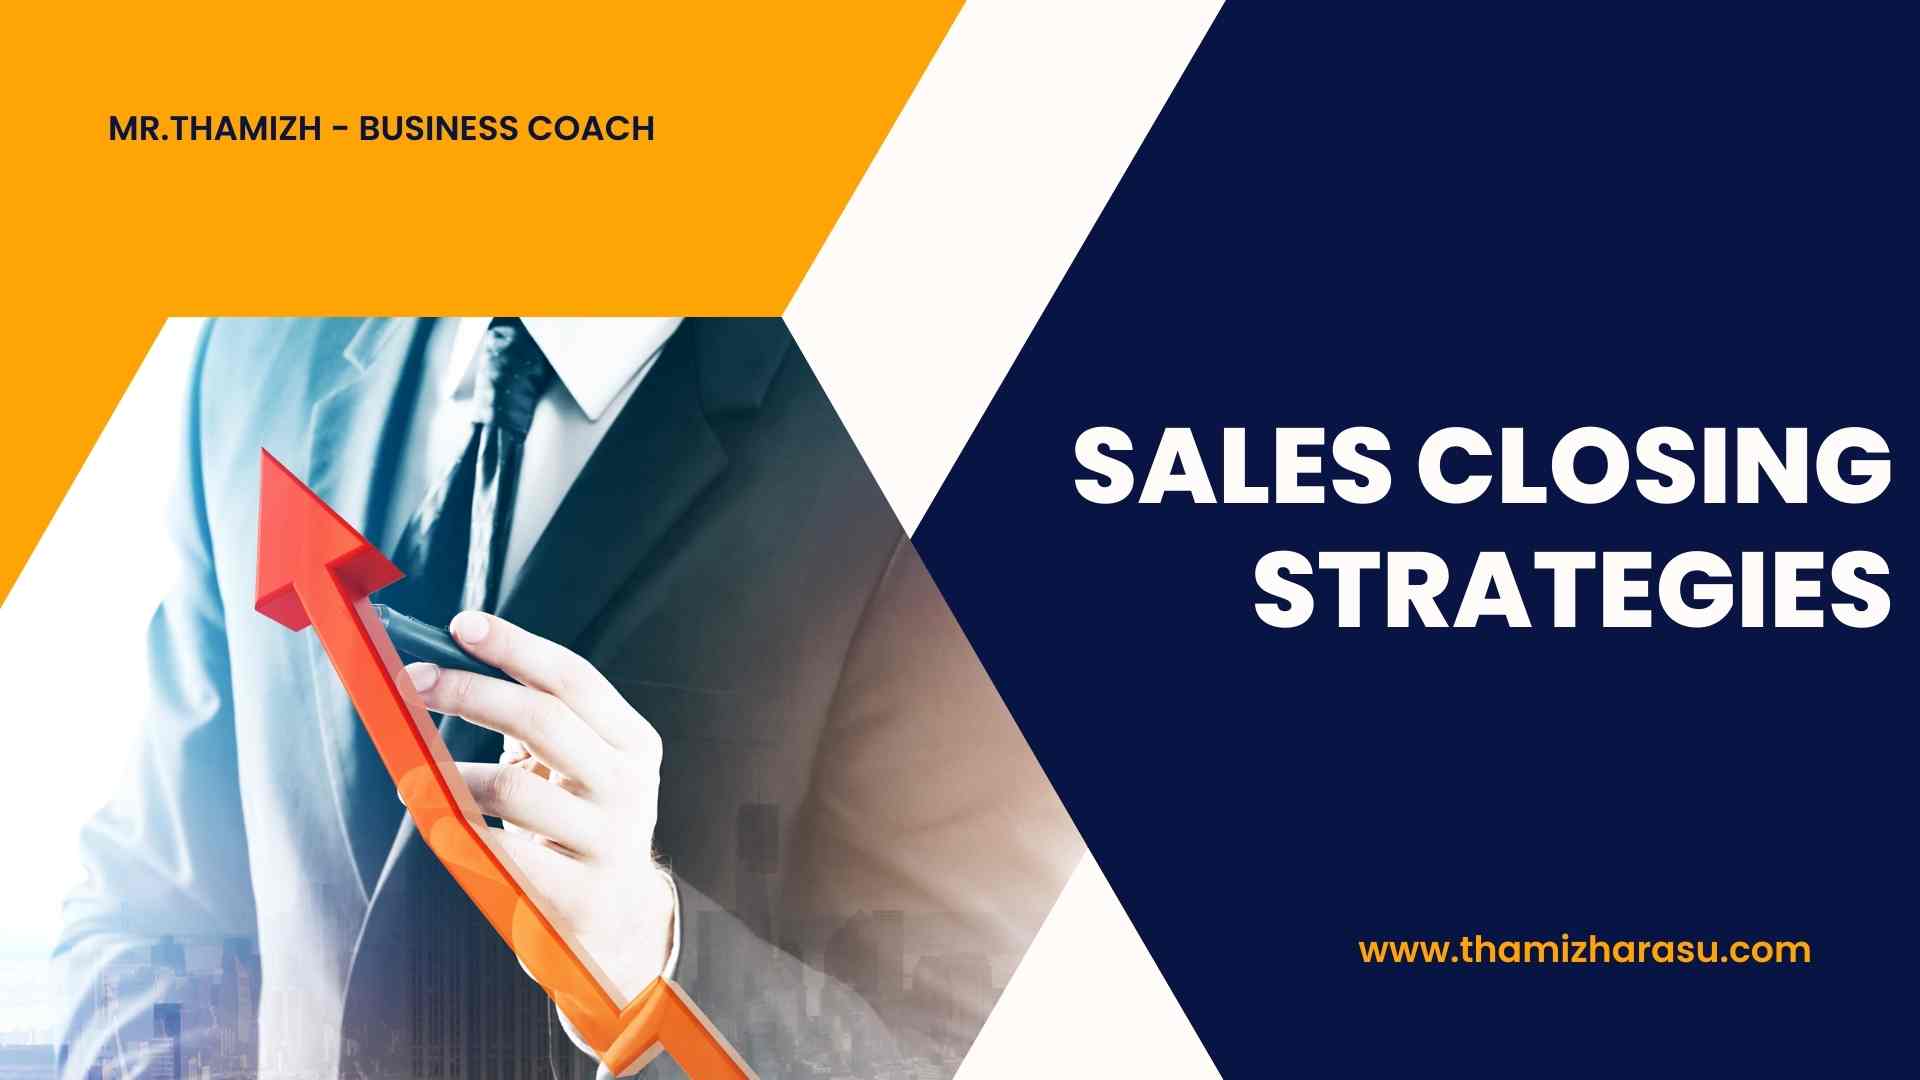 Sales closing strategies